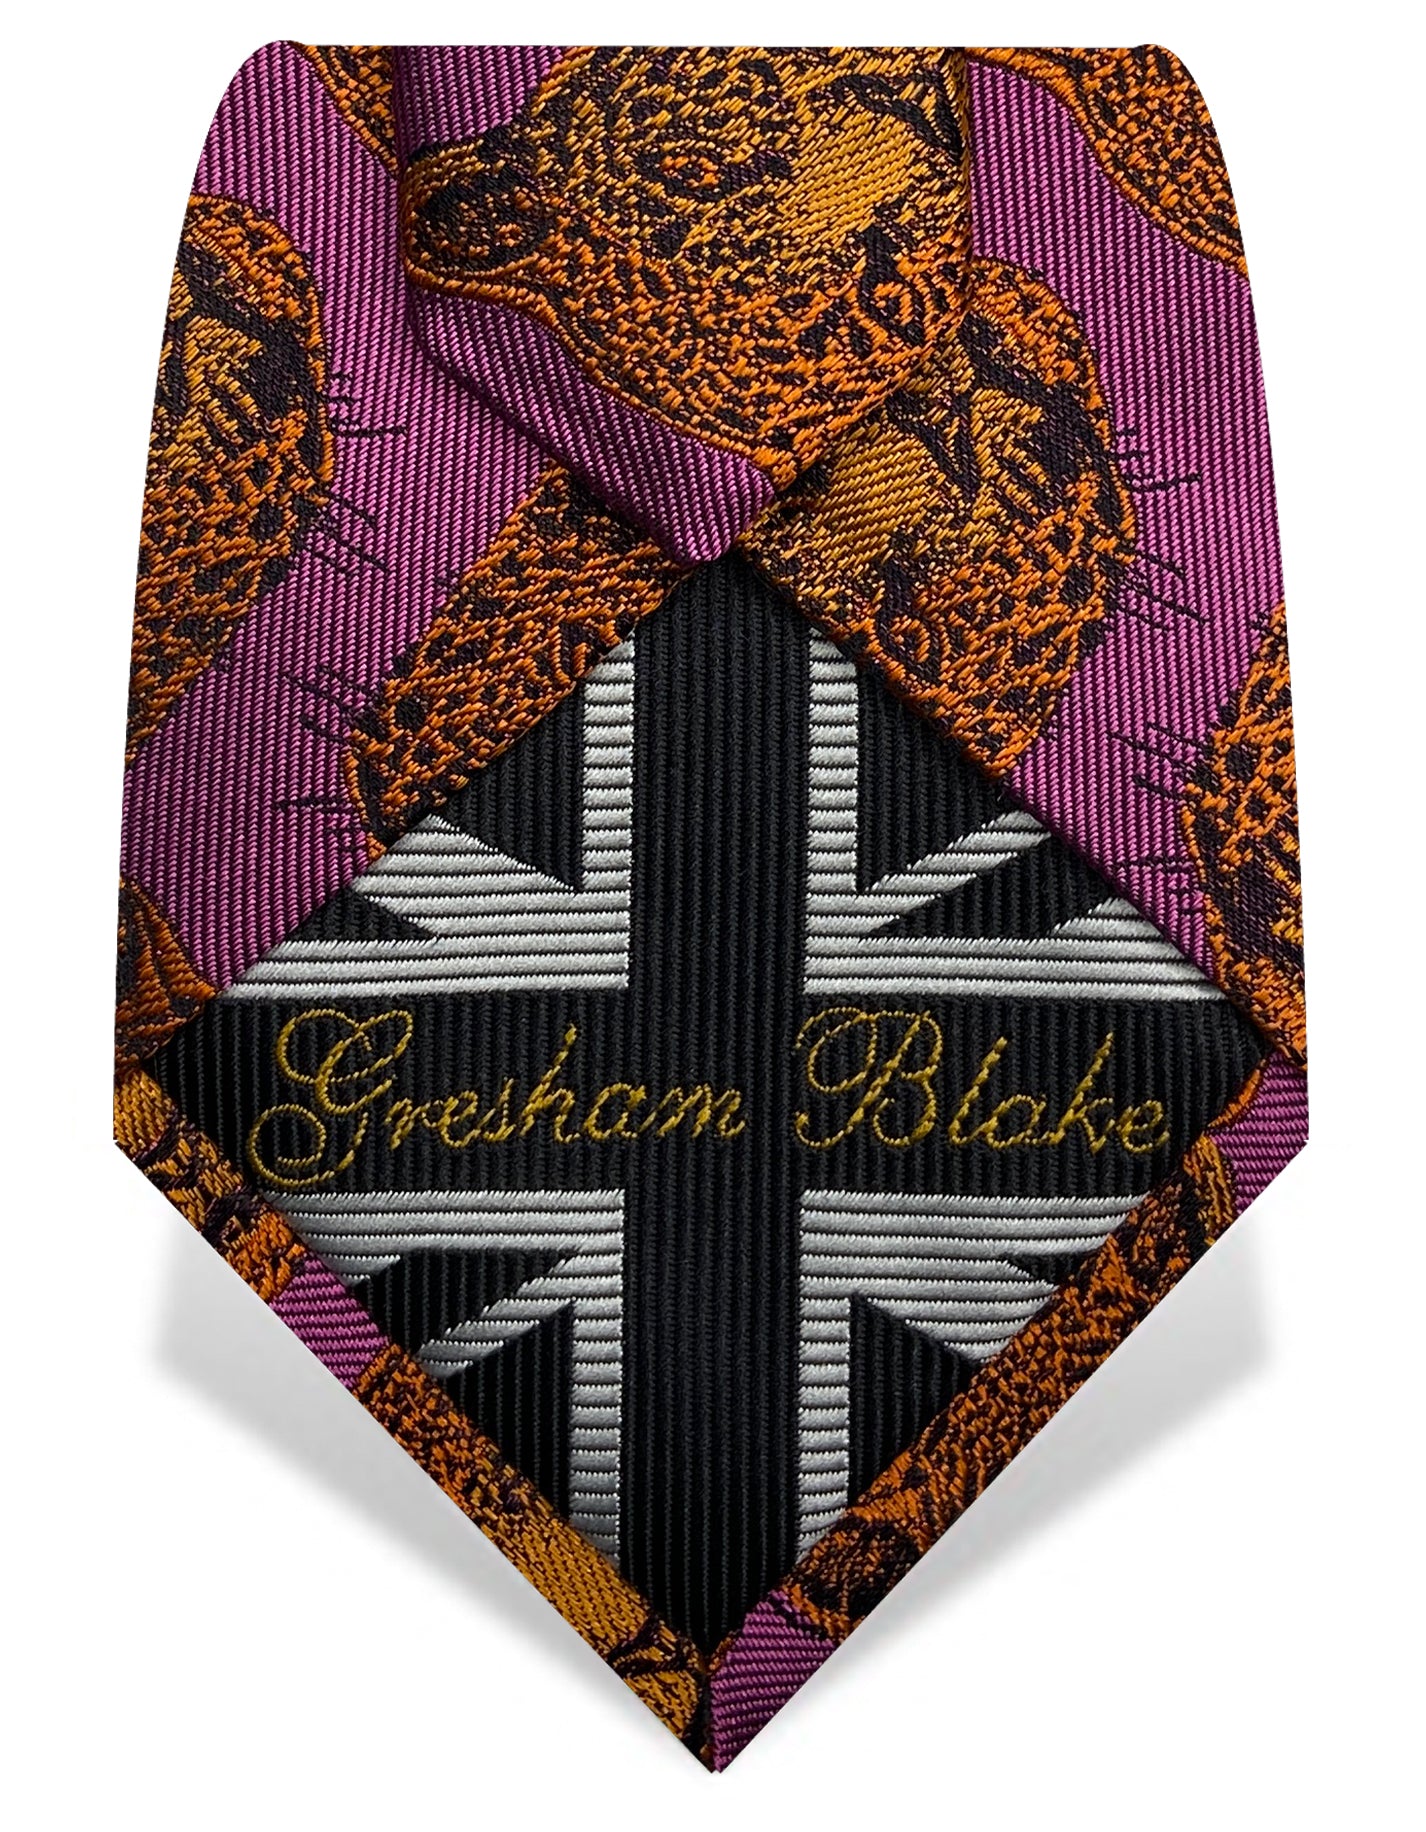 Fuchsia & Orange Leopard Tie